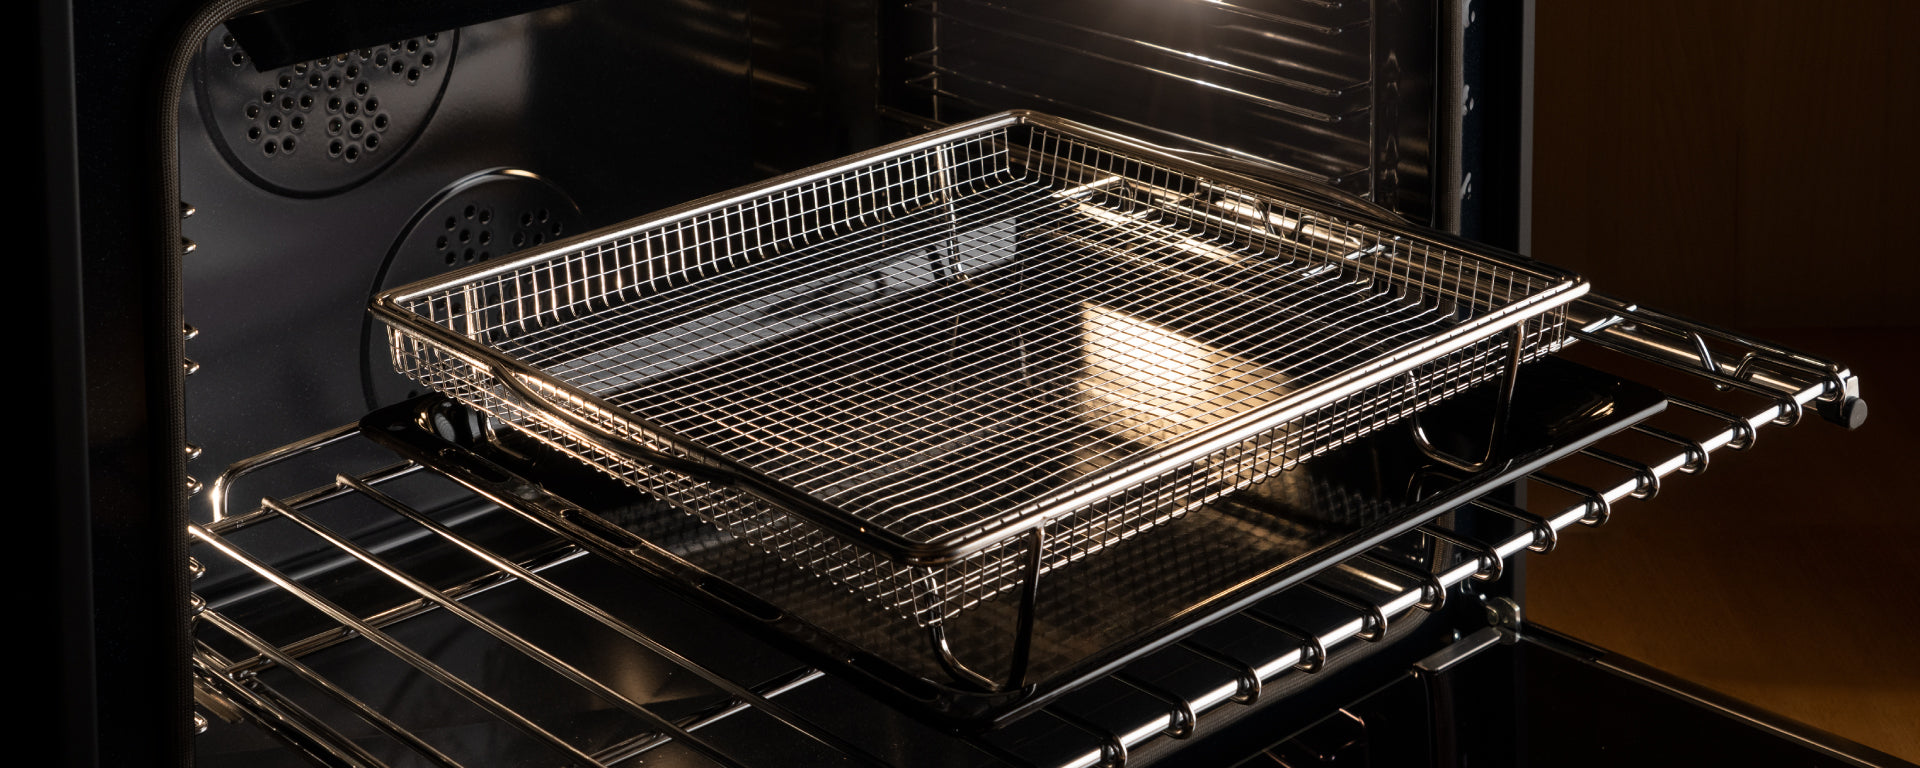 Bertazzoni Professional Series 30" 4 Heating Zones Arancio Freestanding Induction Range With 4.6 Cu.Ft. Self-Clean Oven